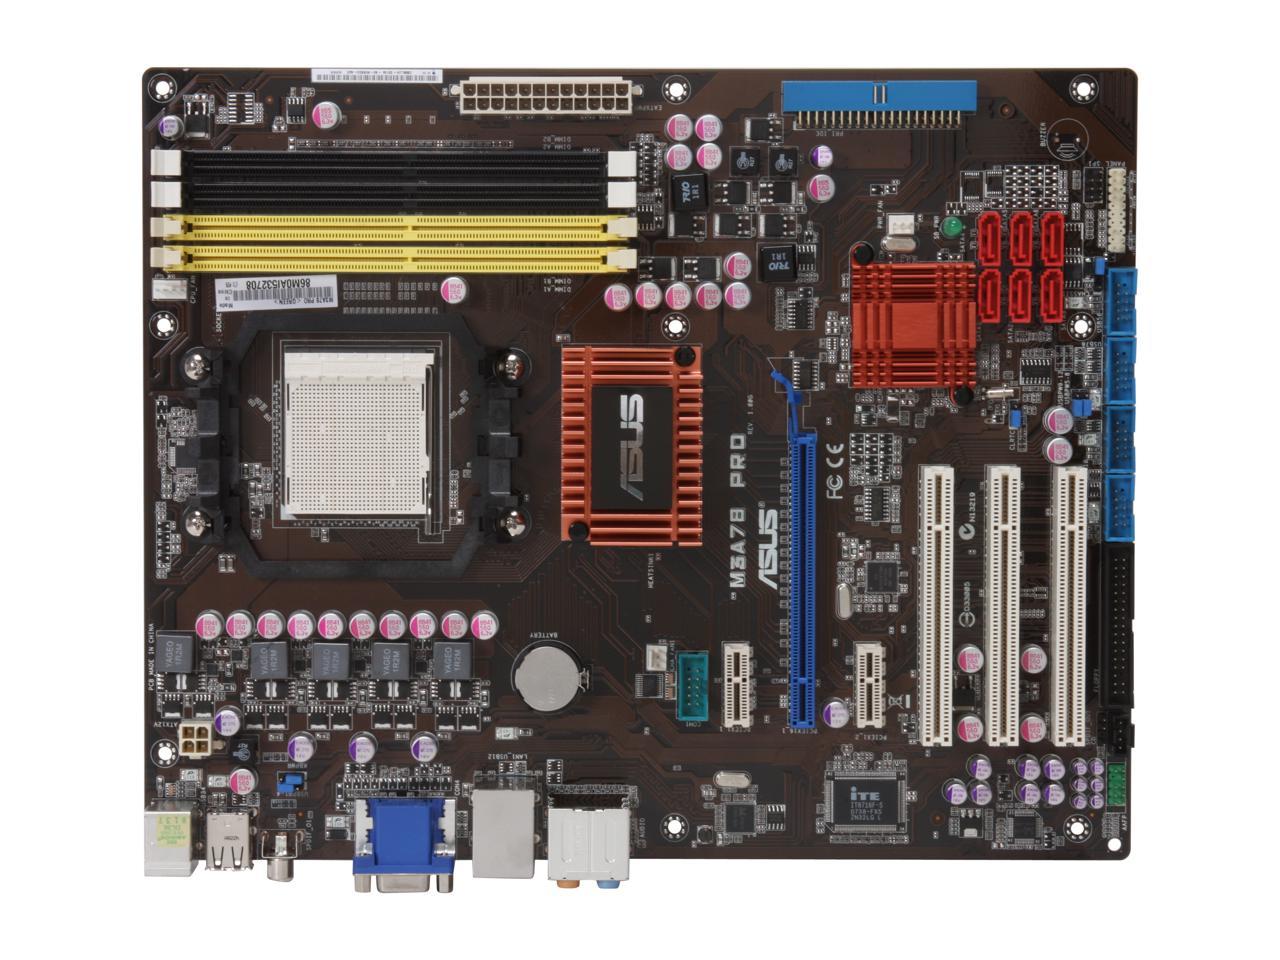 ASUS M3A78 Pro AM2+/AM2 ATX AMD Motherboard - Newegg.com